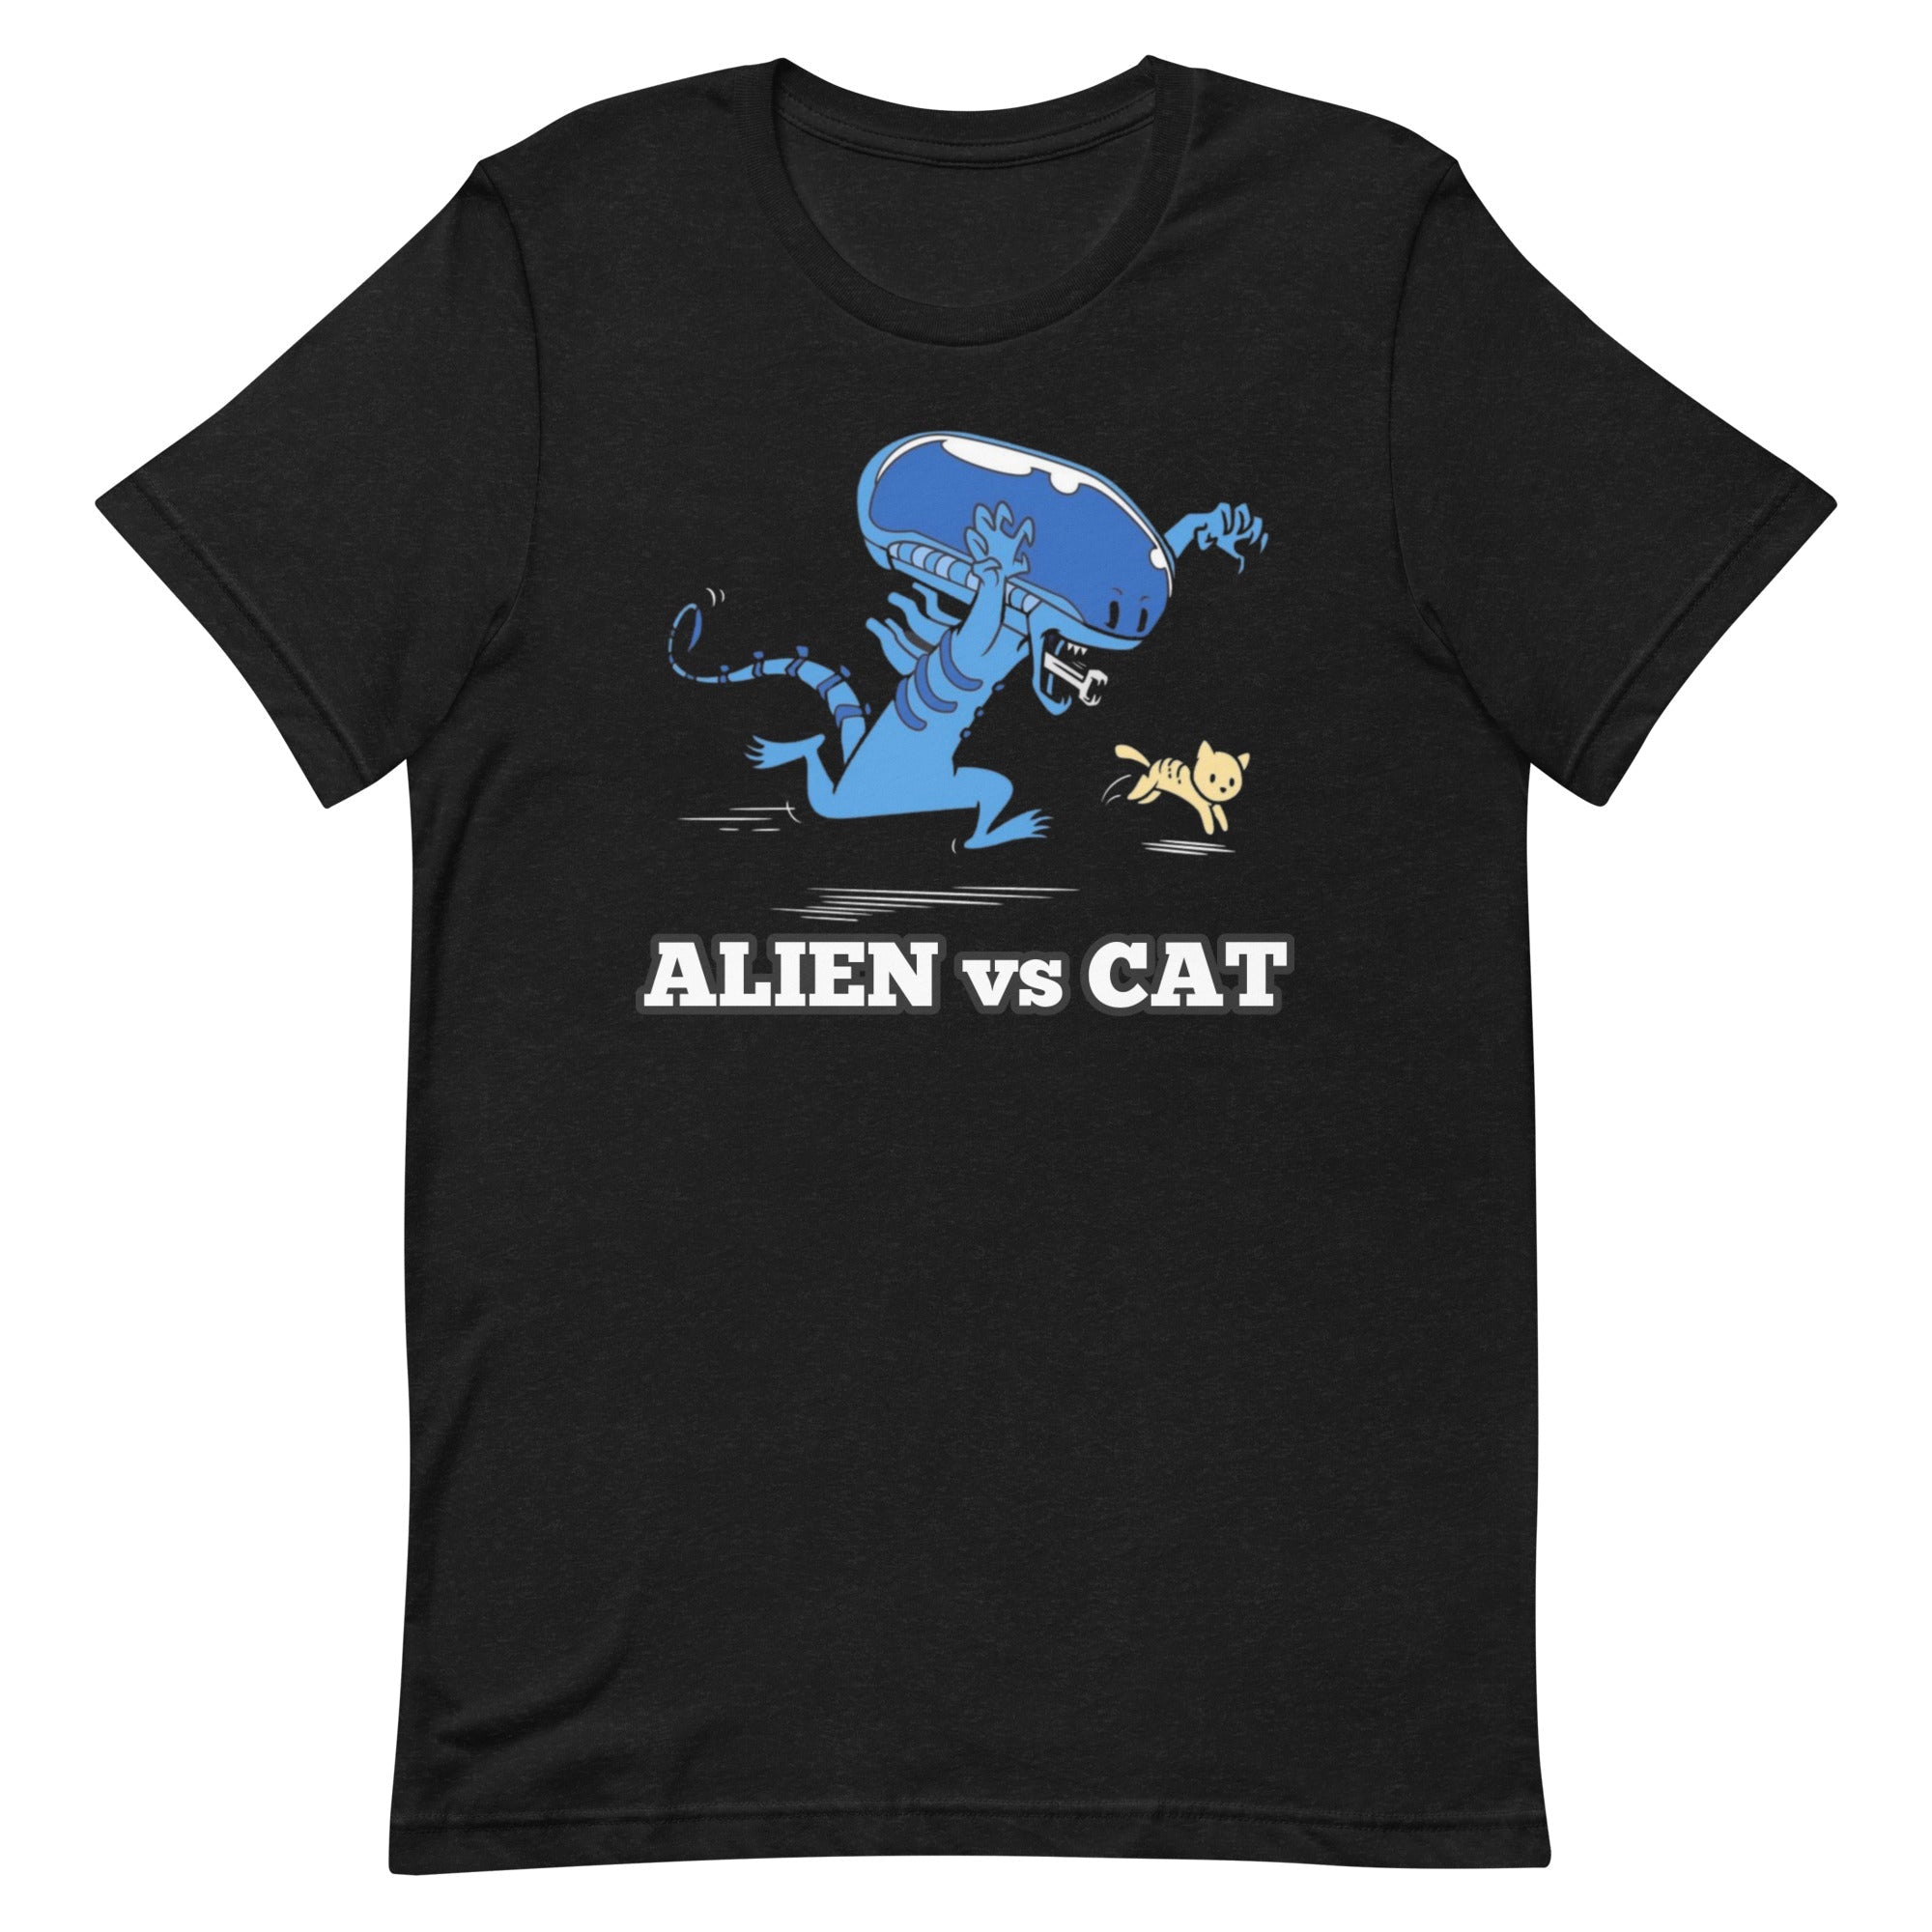 Alien chasing Cat shirt